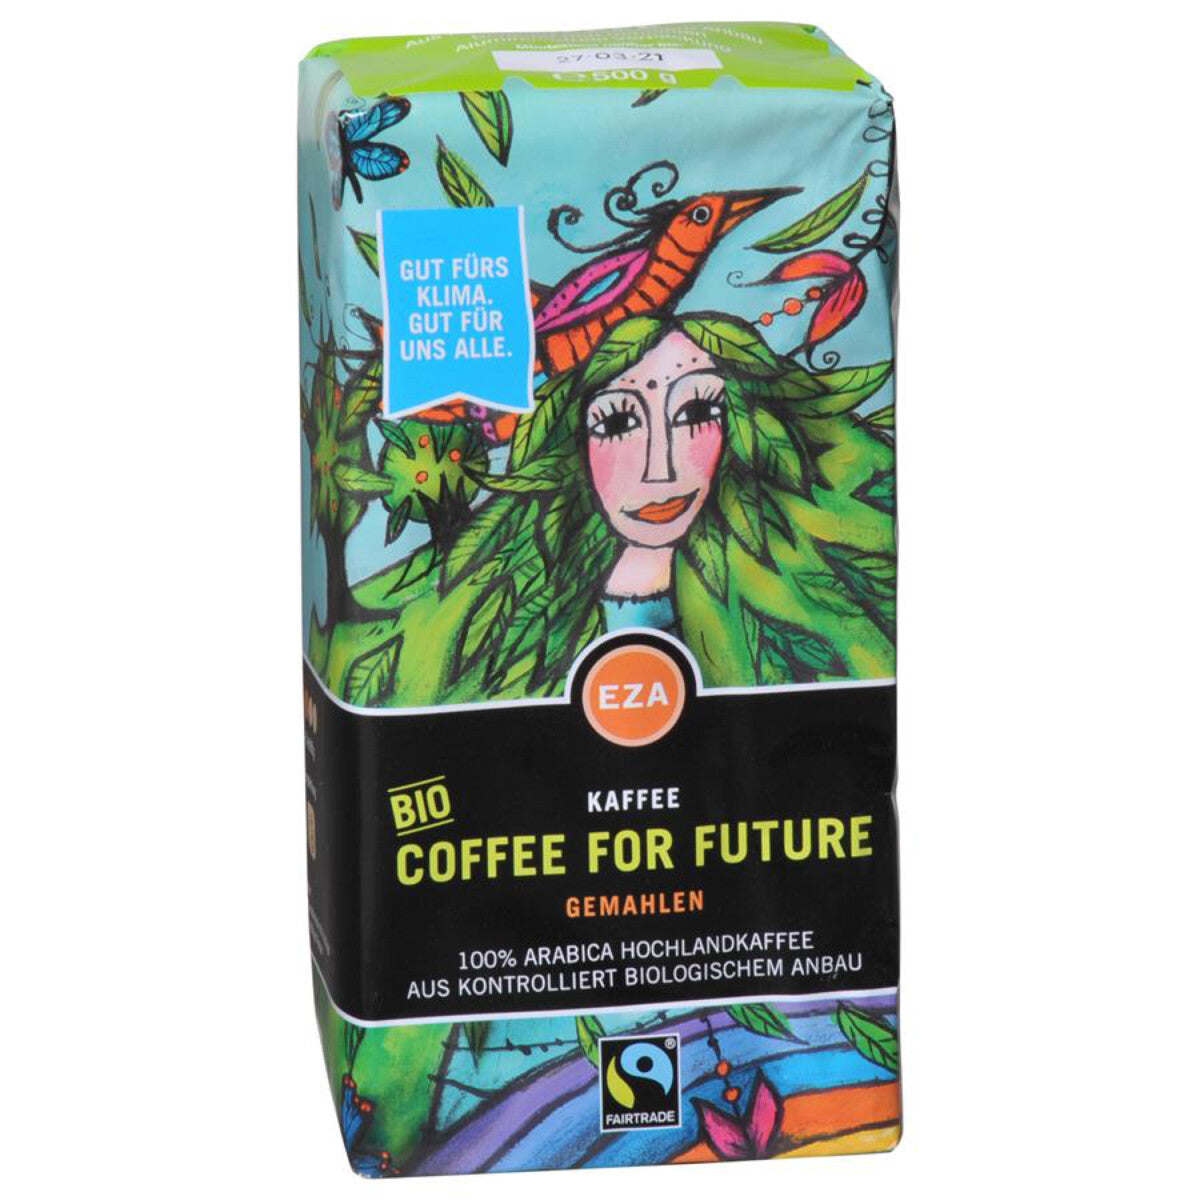 EZA Coffee for future, gemahlen - 500 g